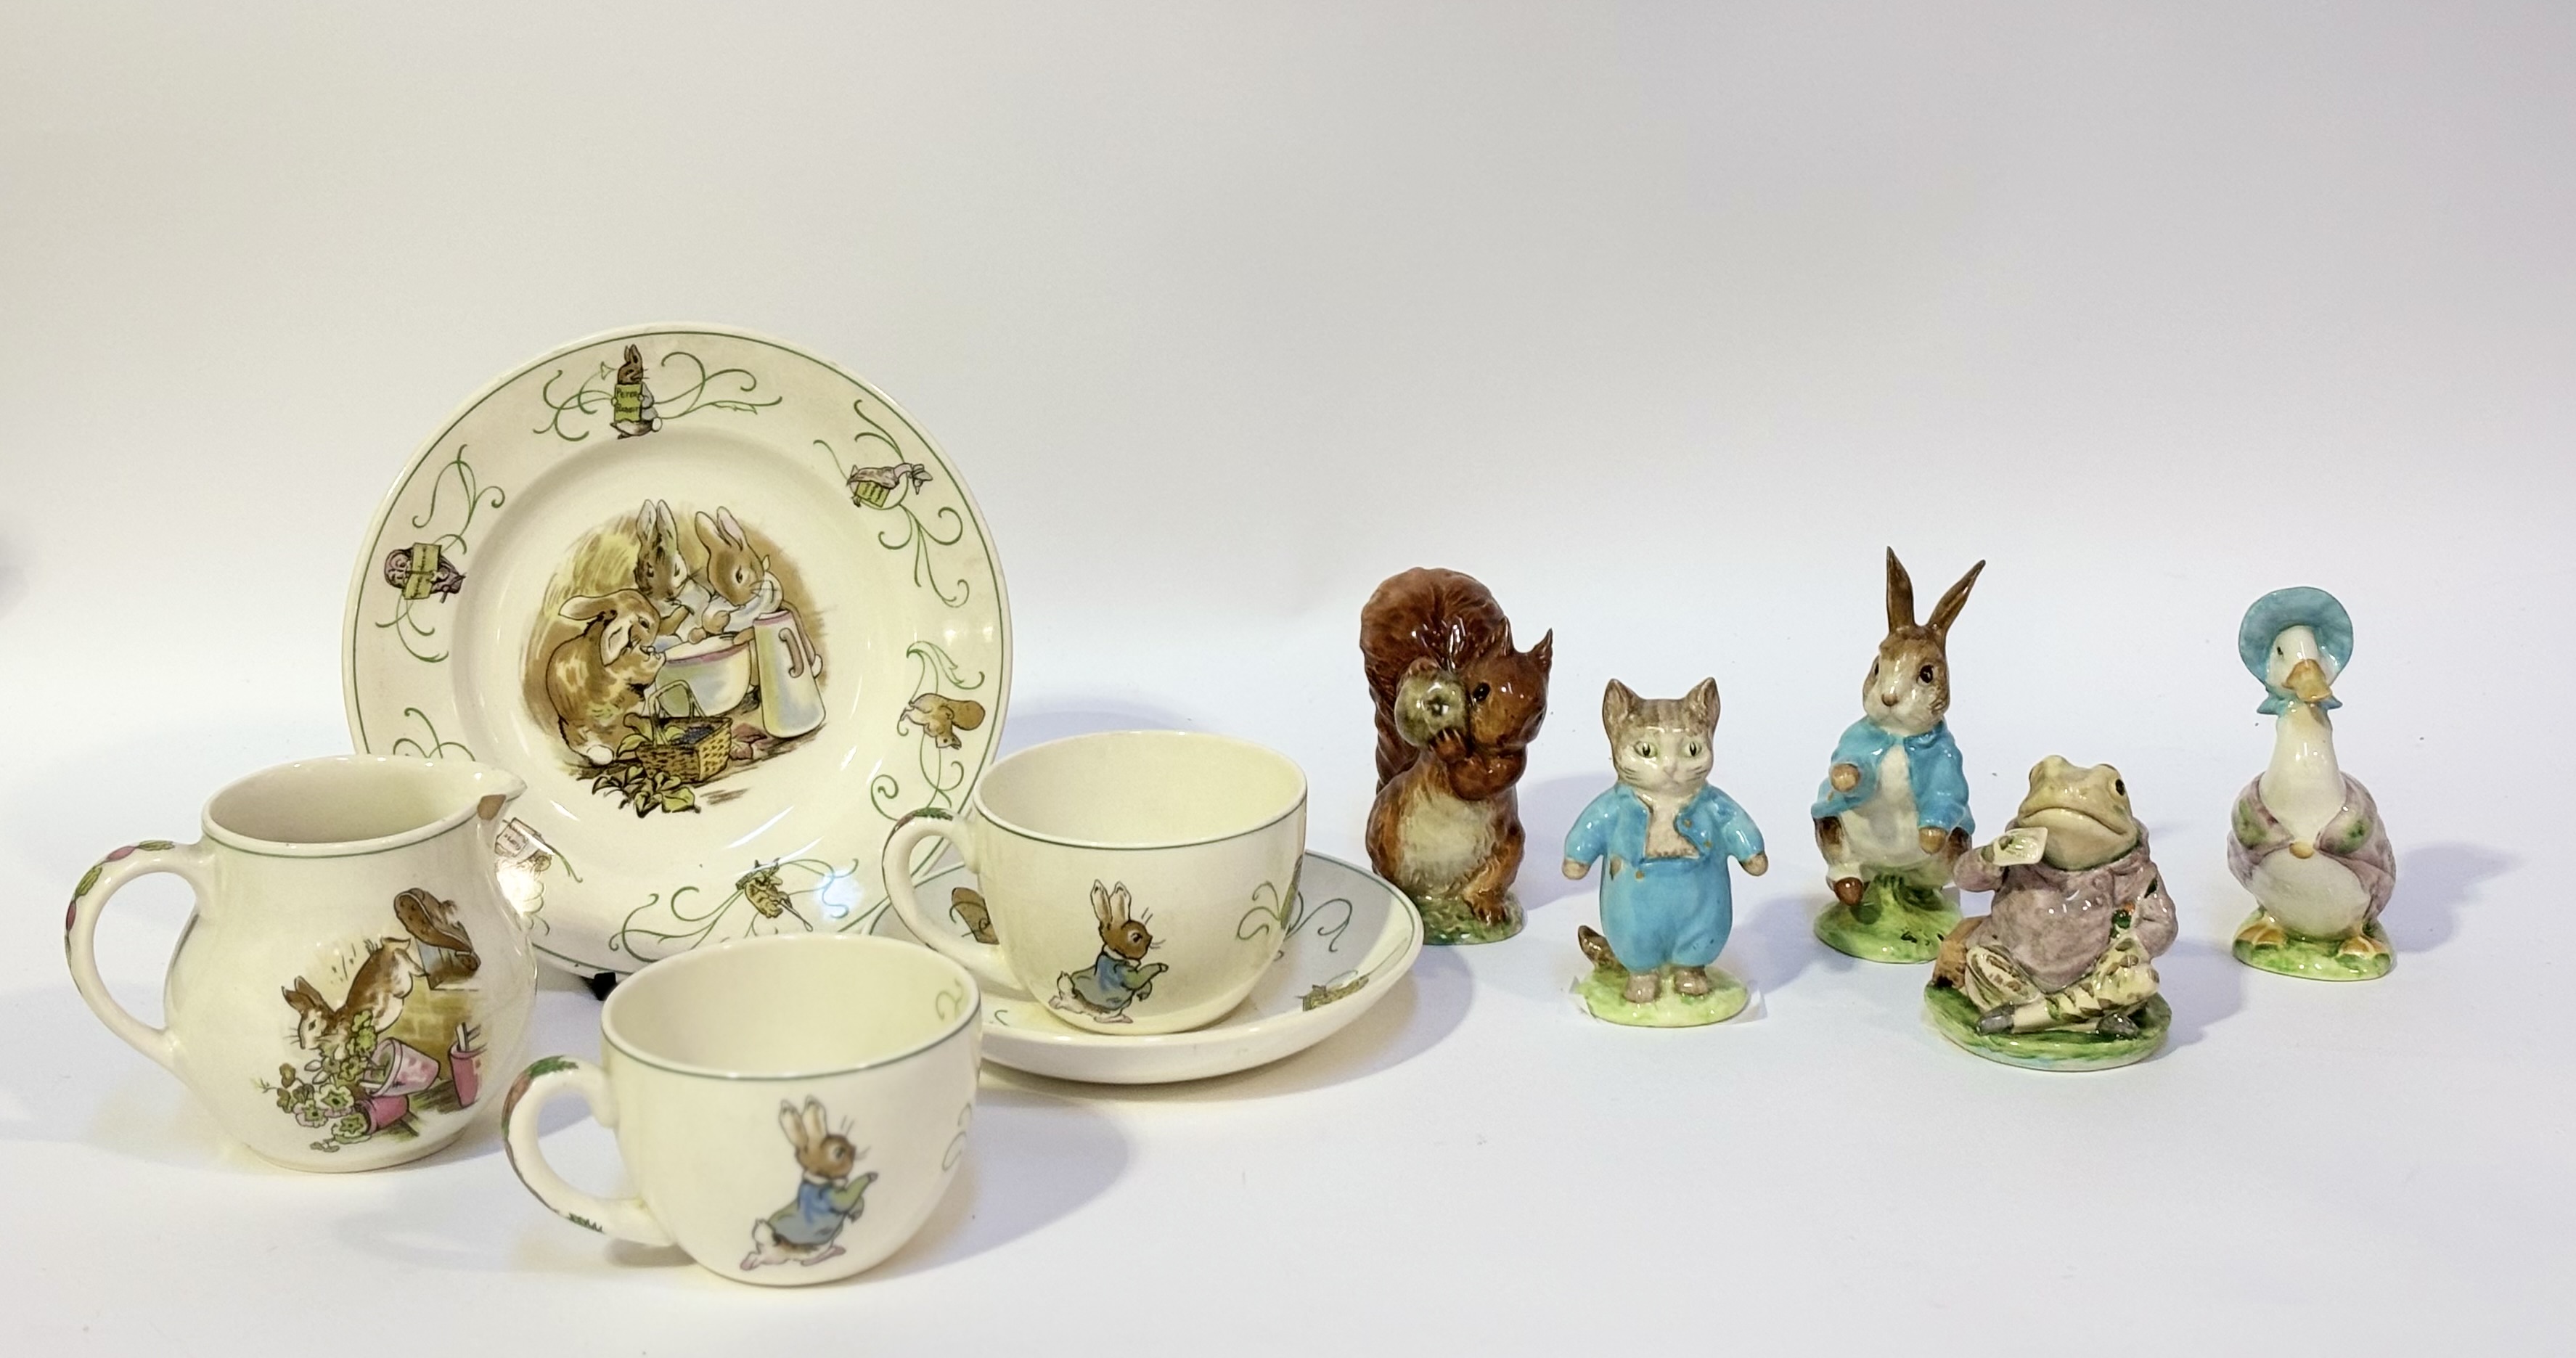 A Wedgwood Barlaston Peter Rabbit pattern part tea service comprising two teacups, a saucer, a plate